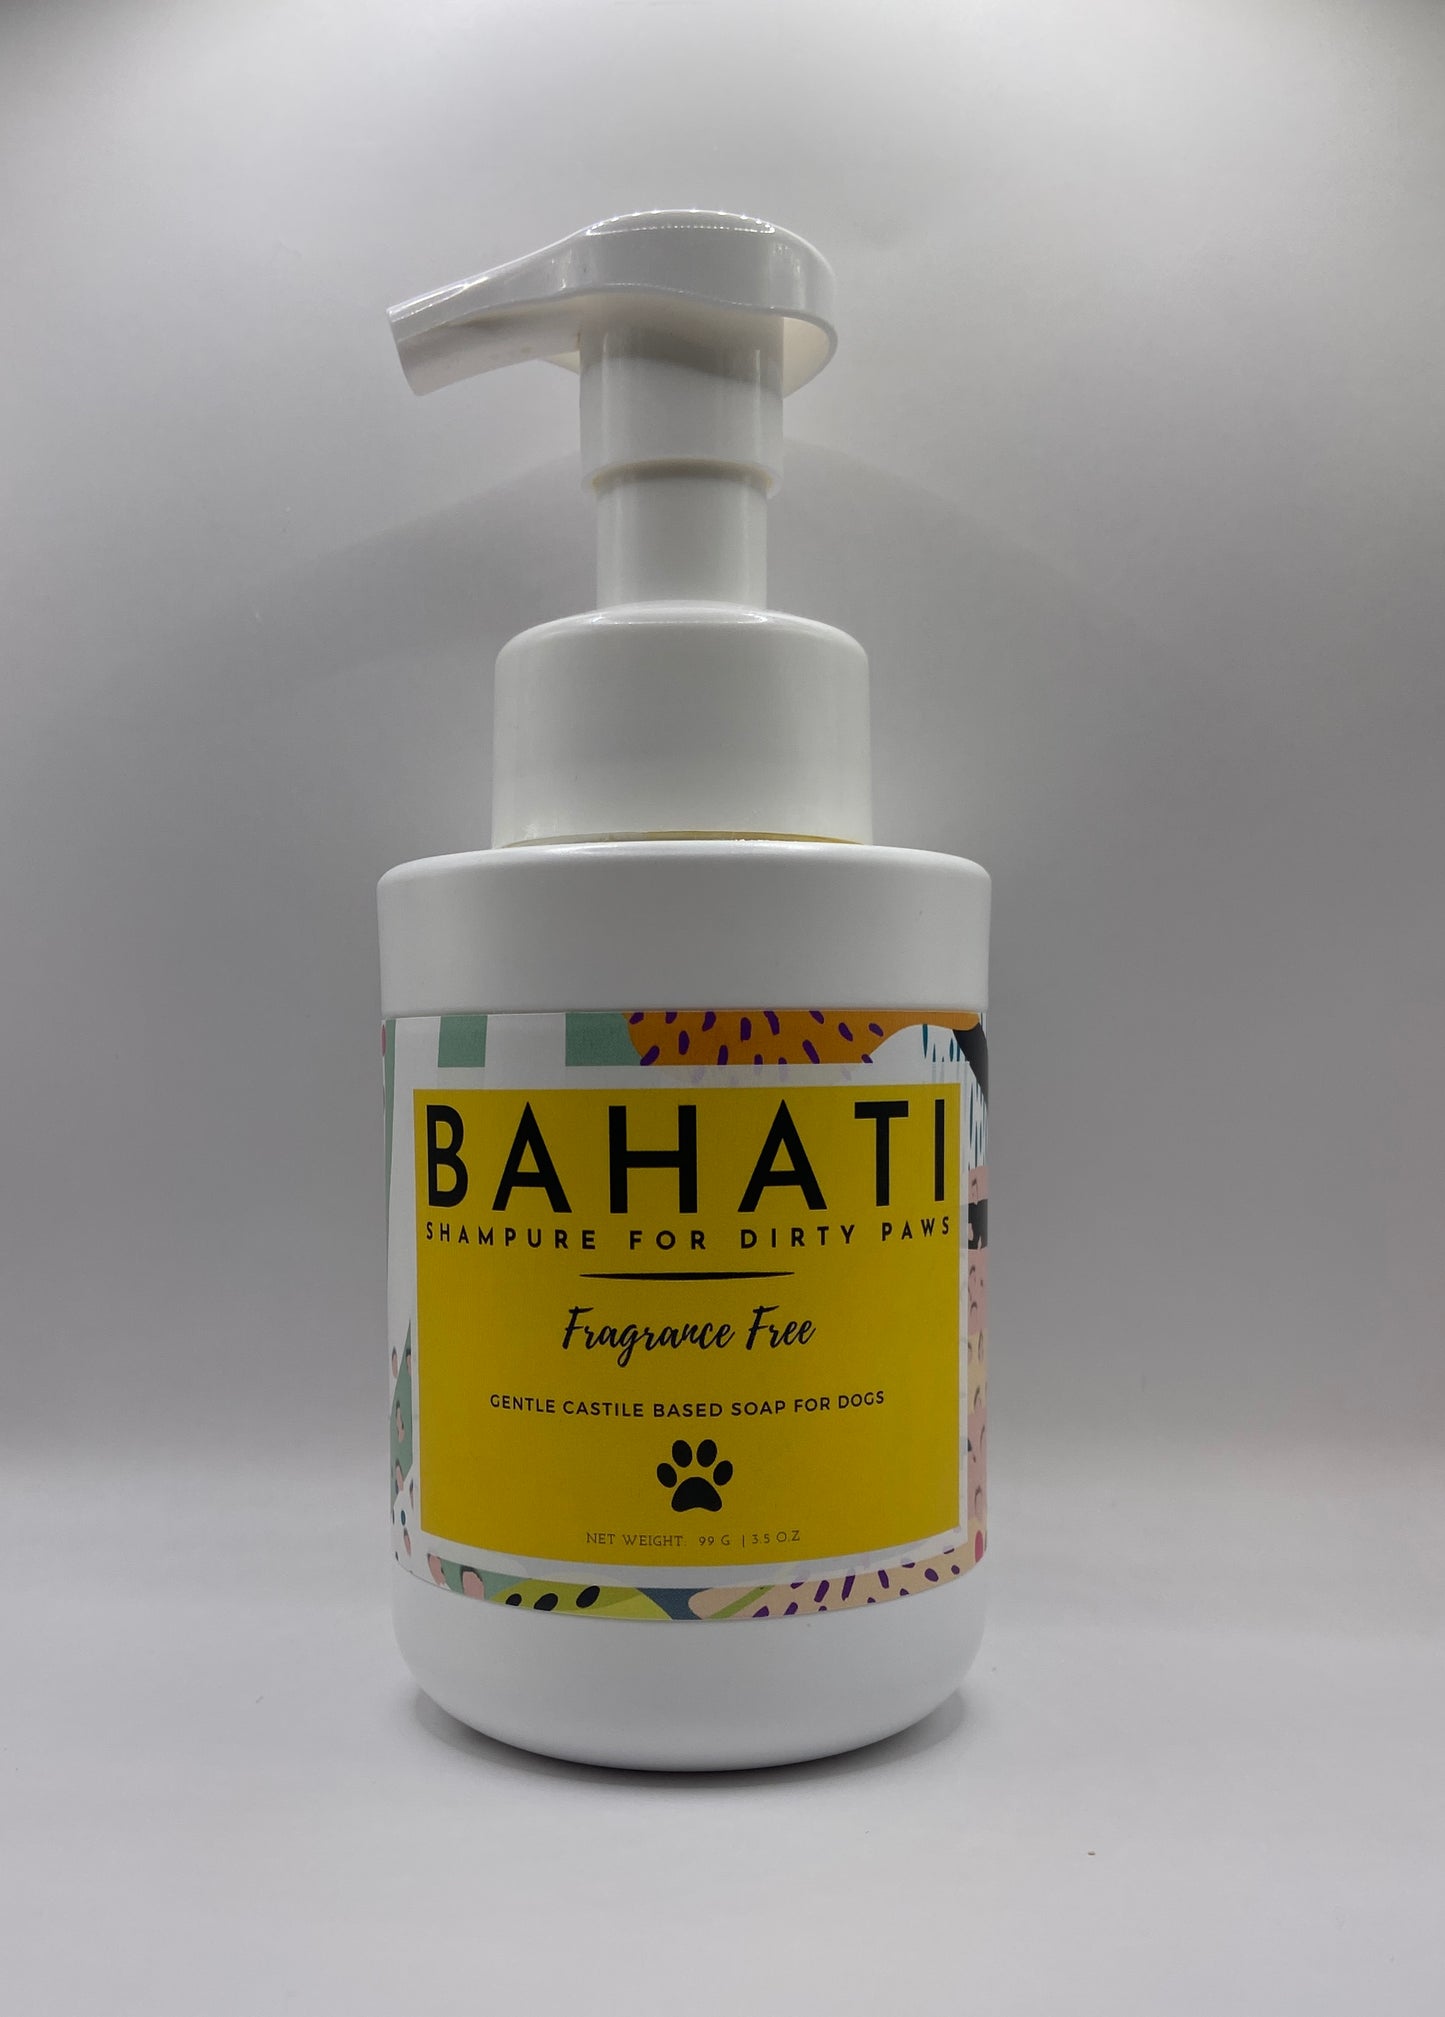 Fragrance Free Gentle Castile Soap-Based Shampoo For Dogs